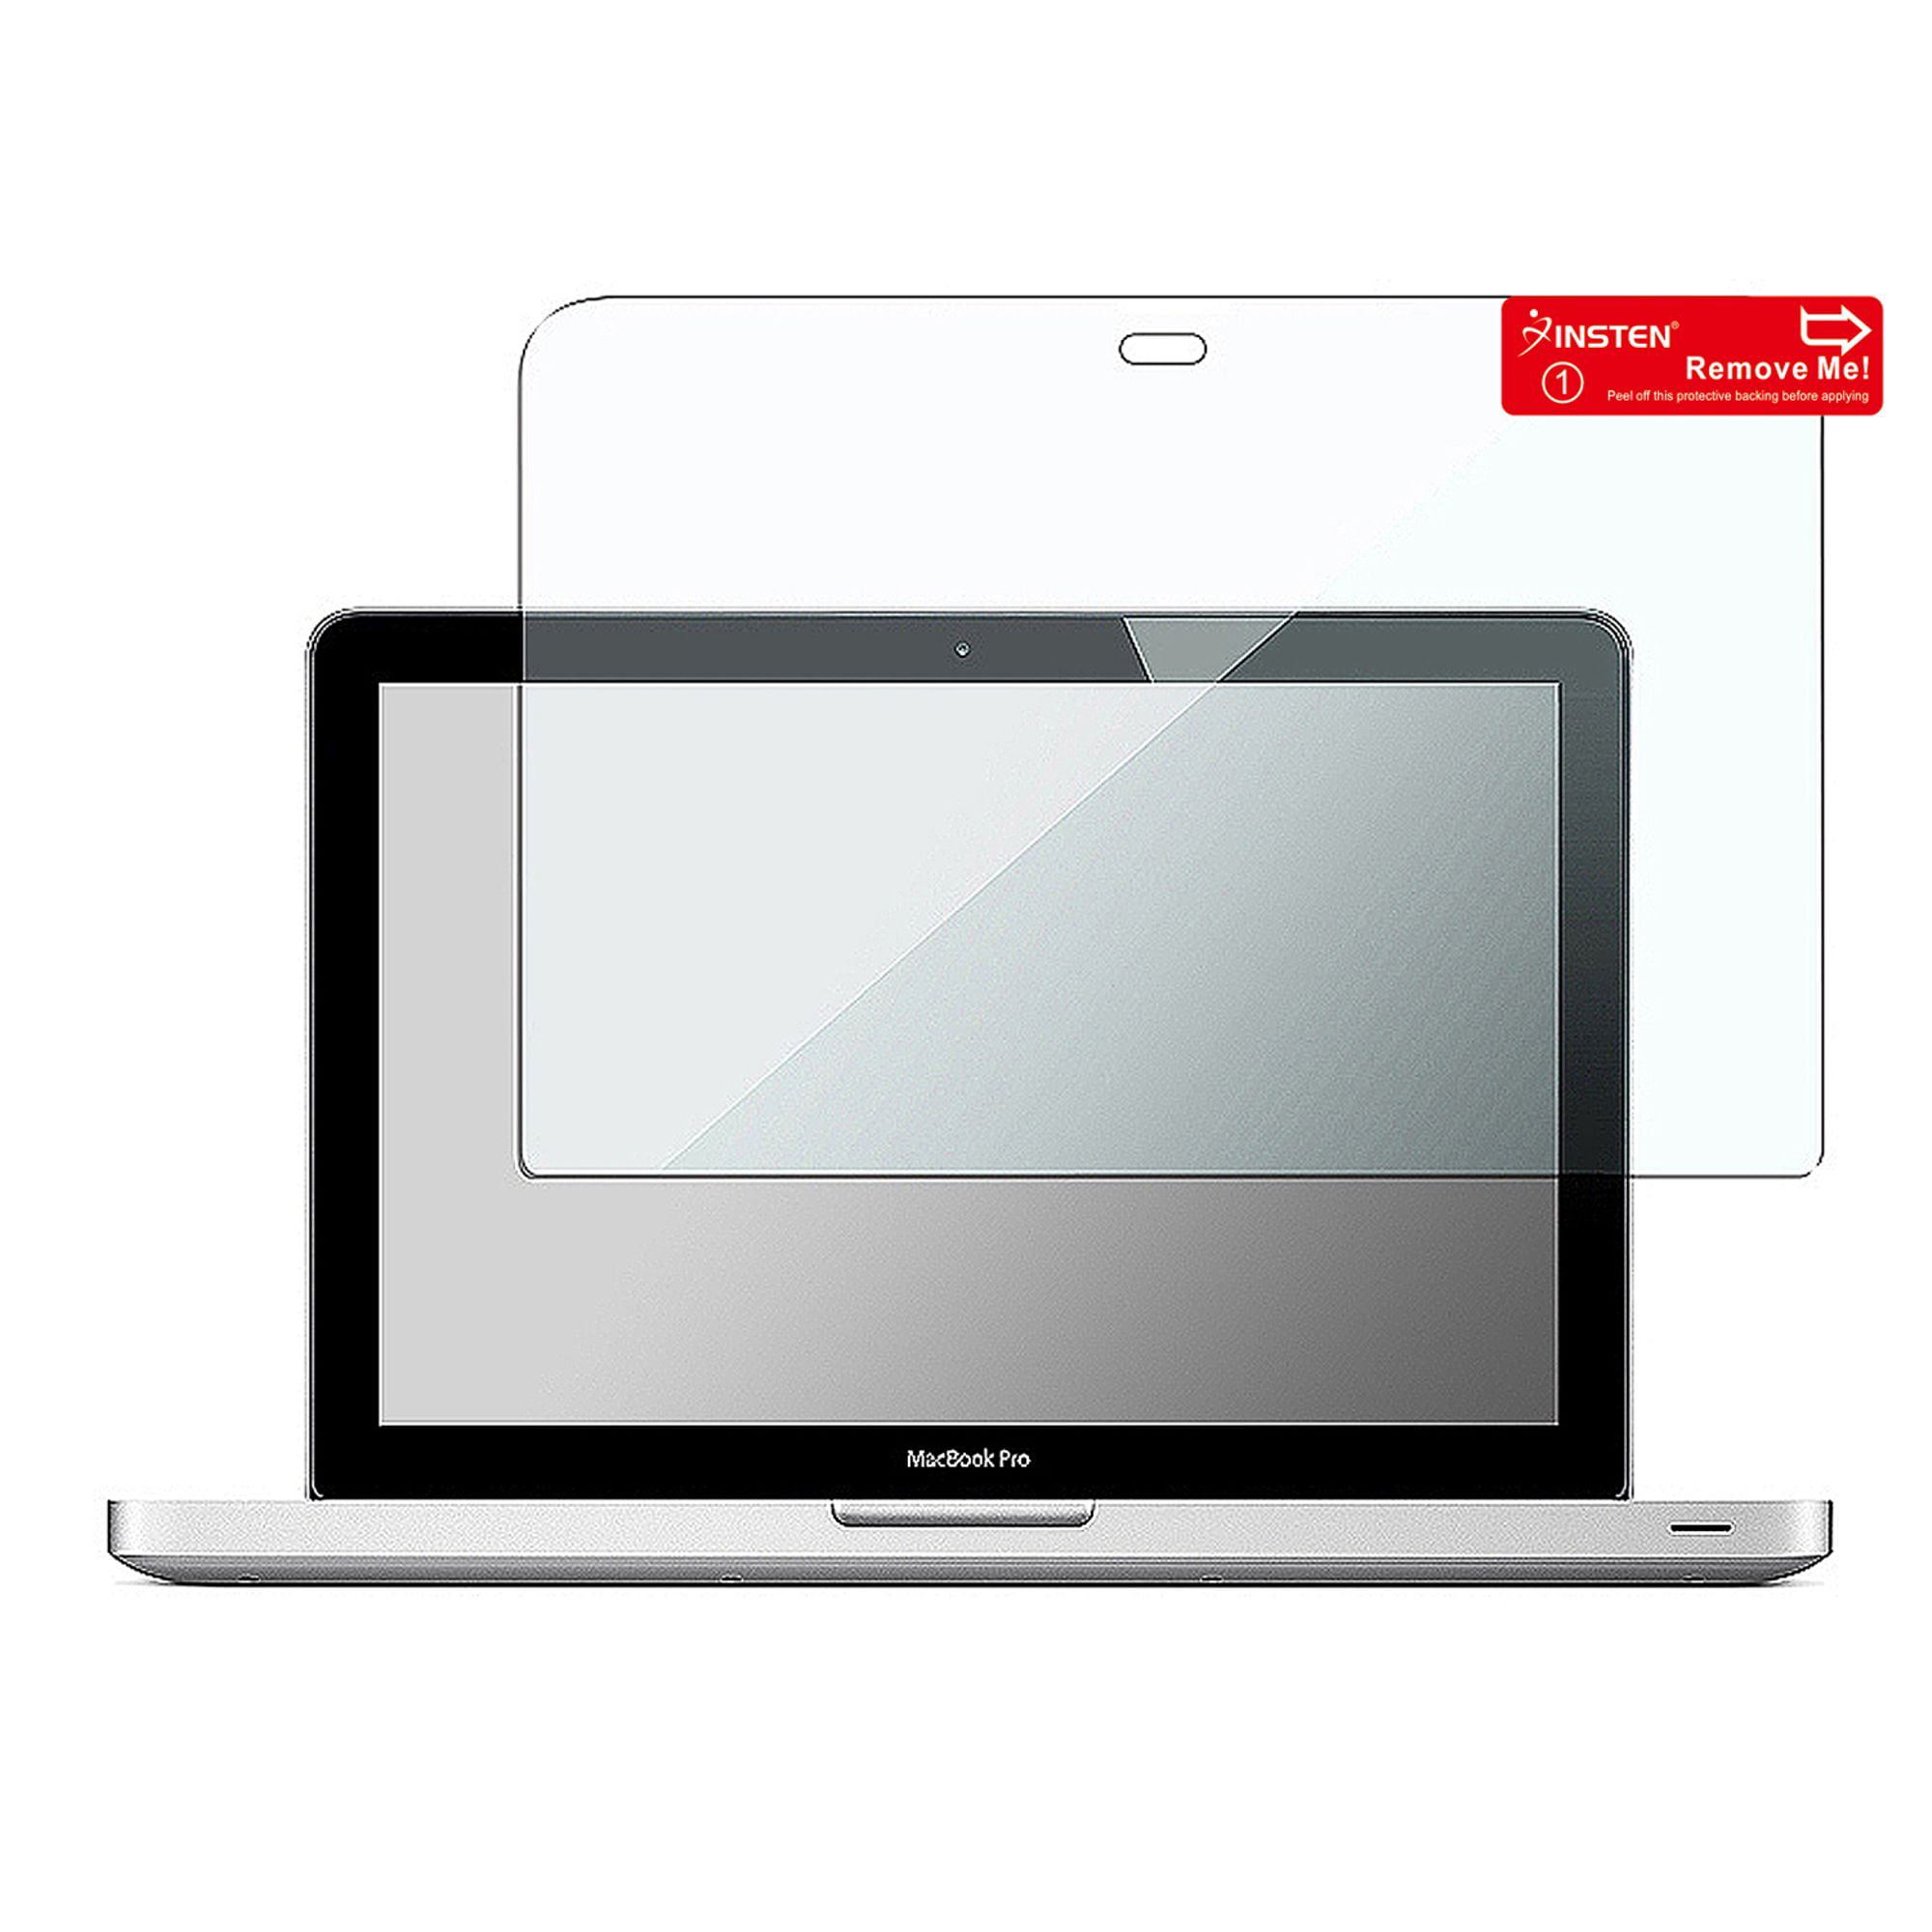 macbook pro 13 mid 2012 screen to retina display